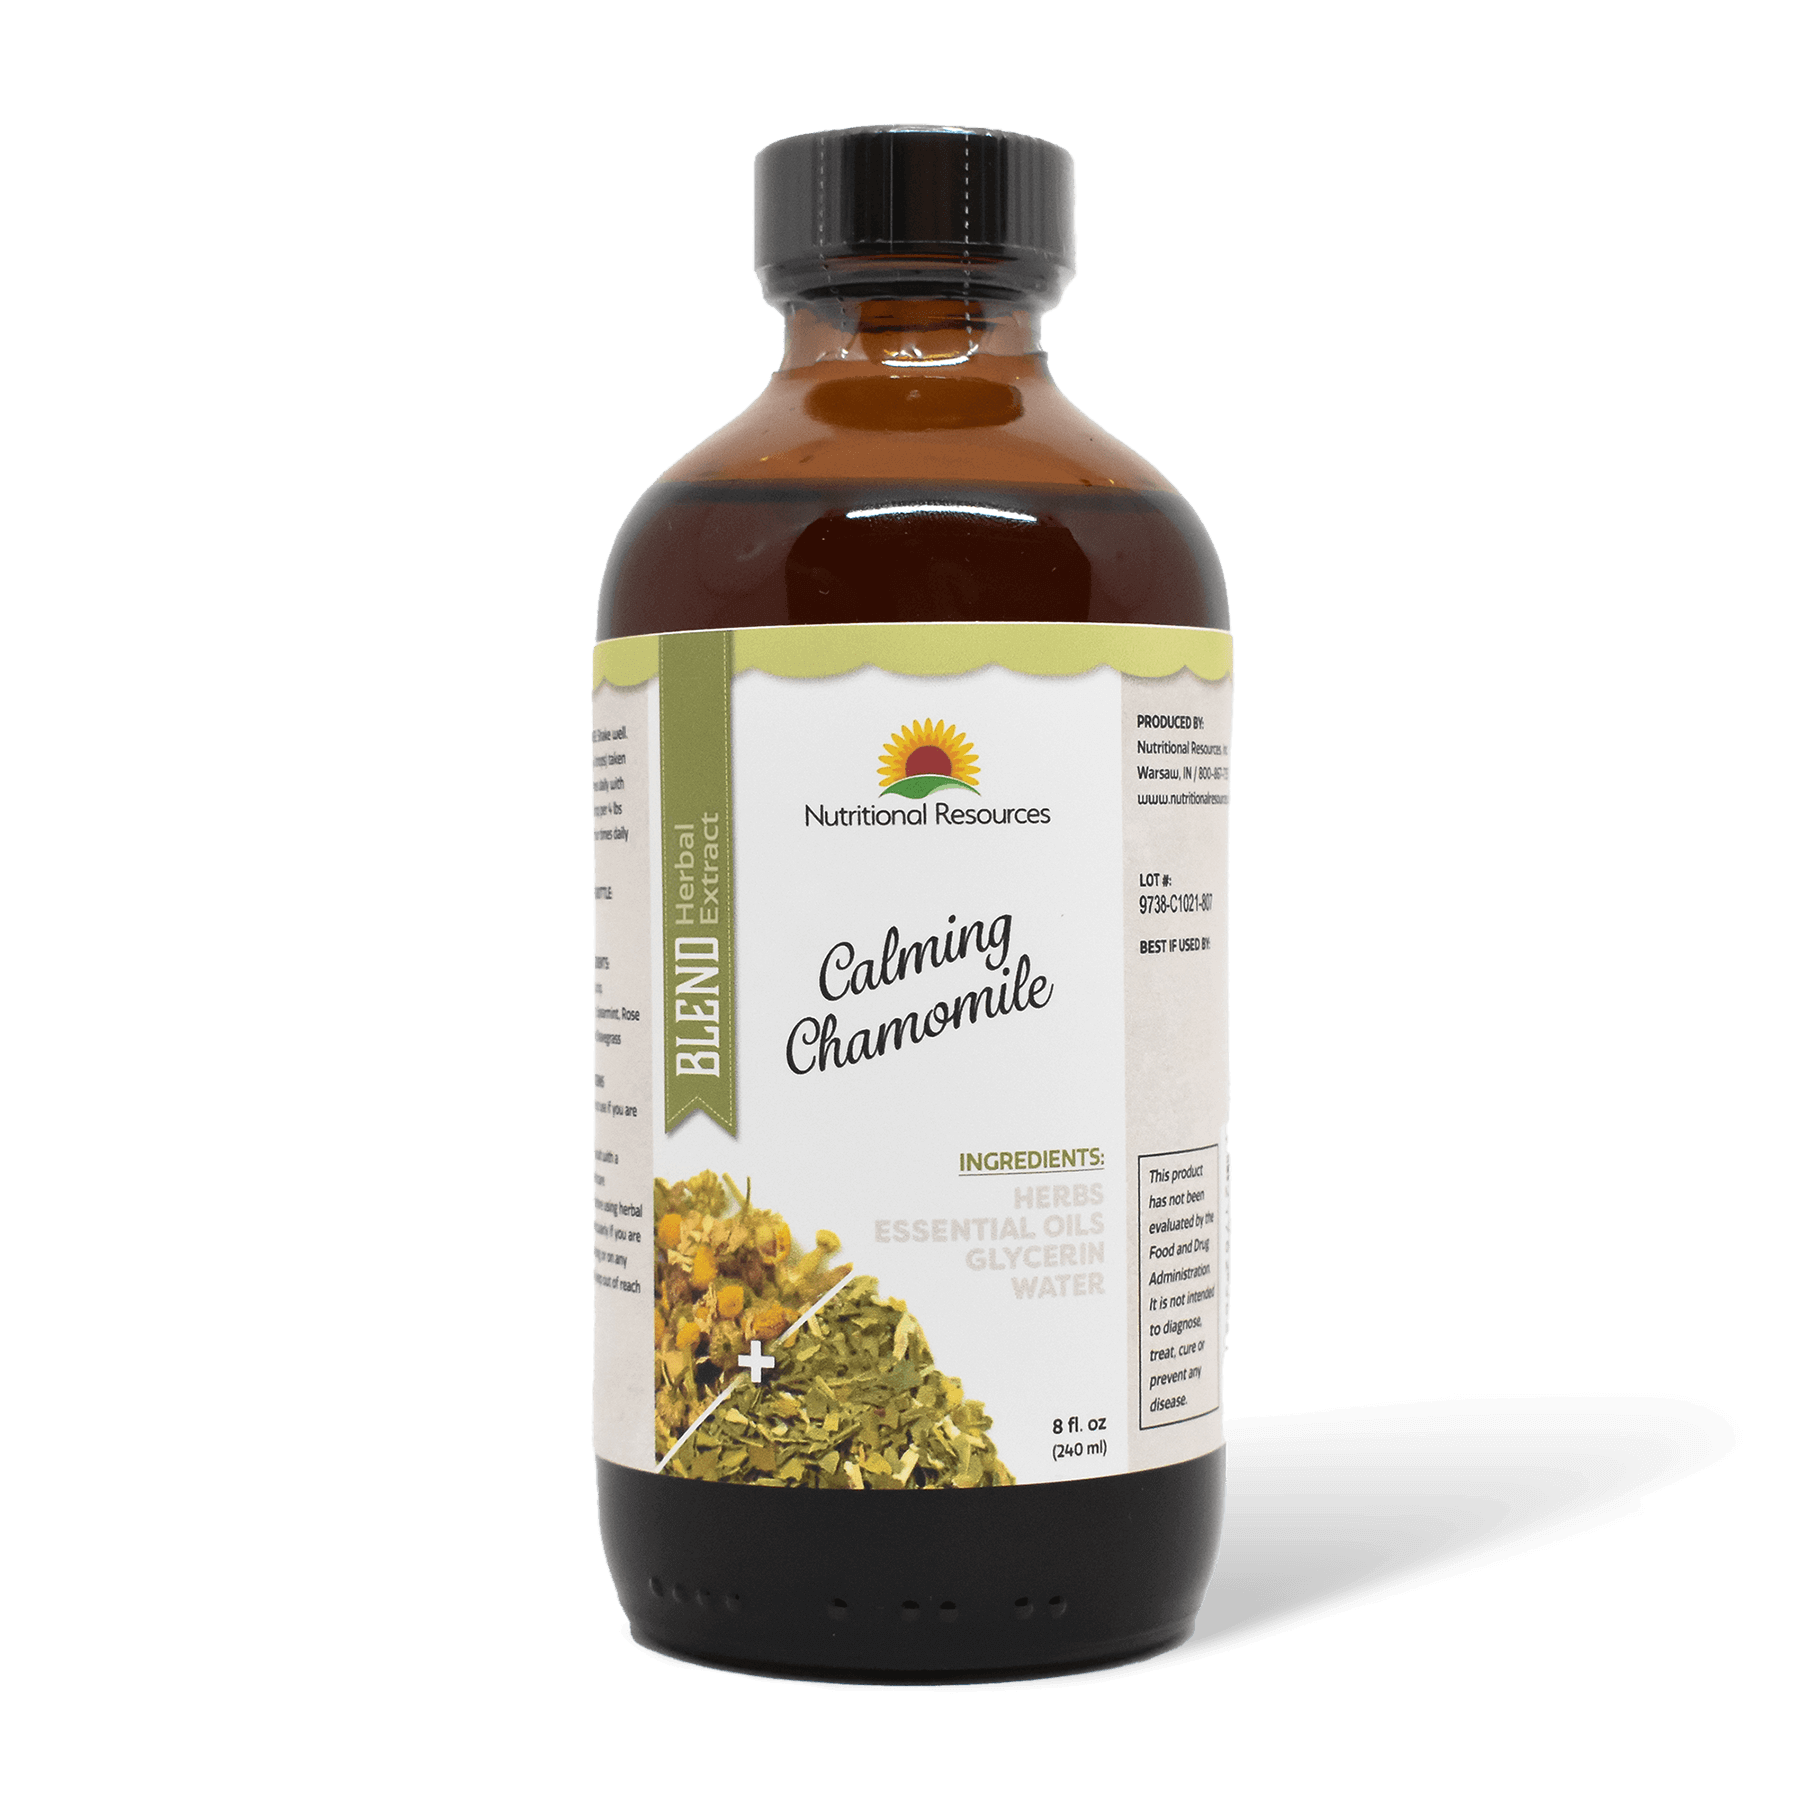 Calming herbal extracts